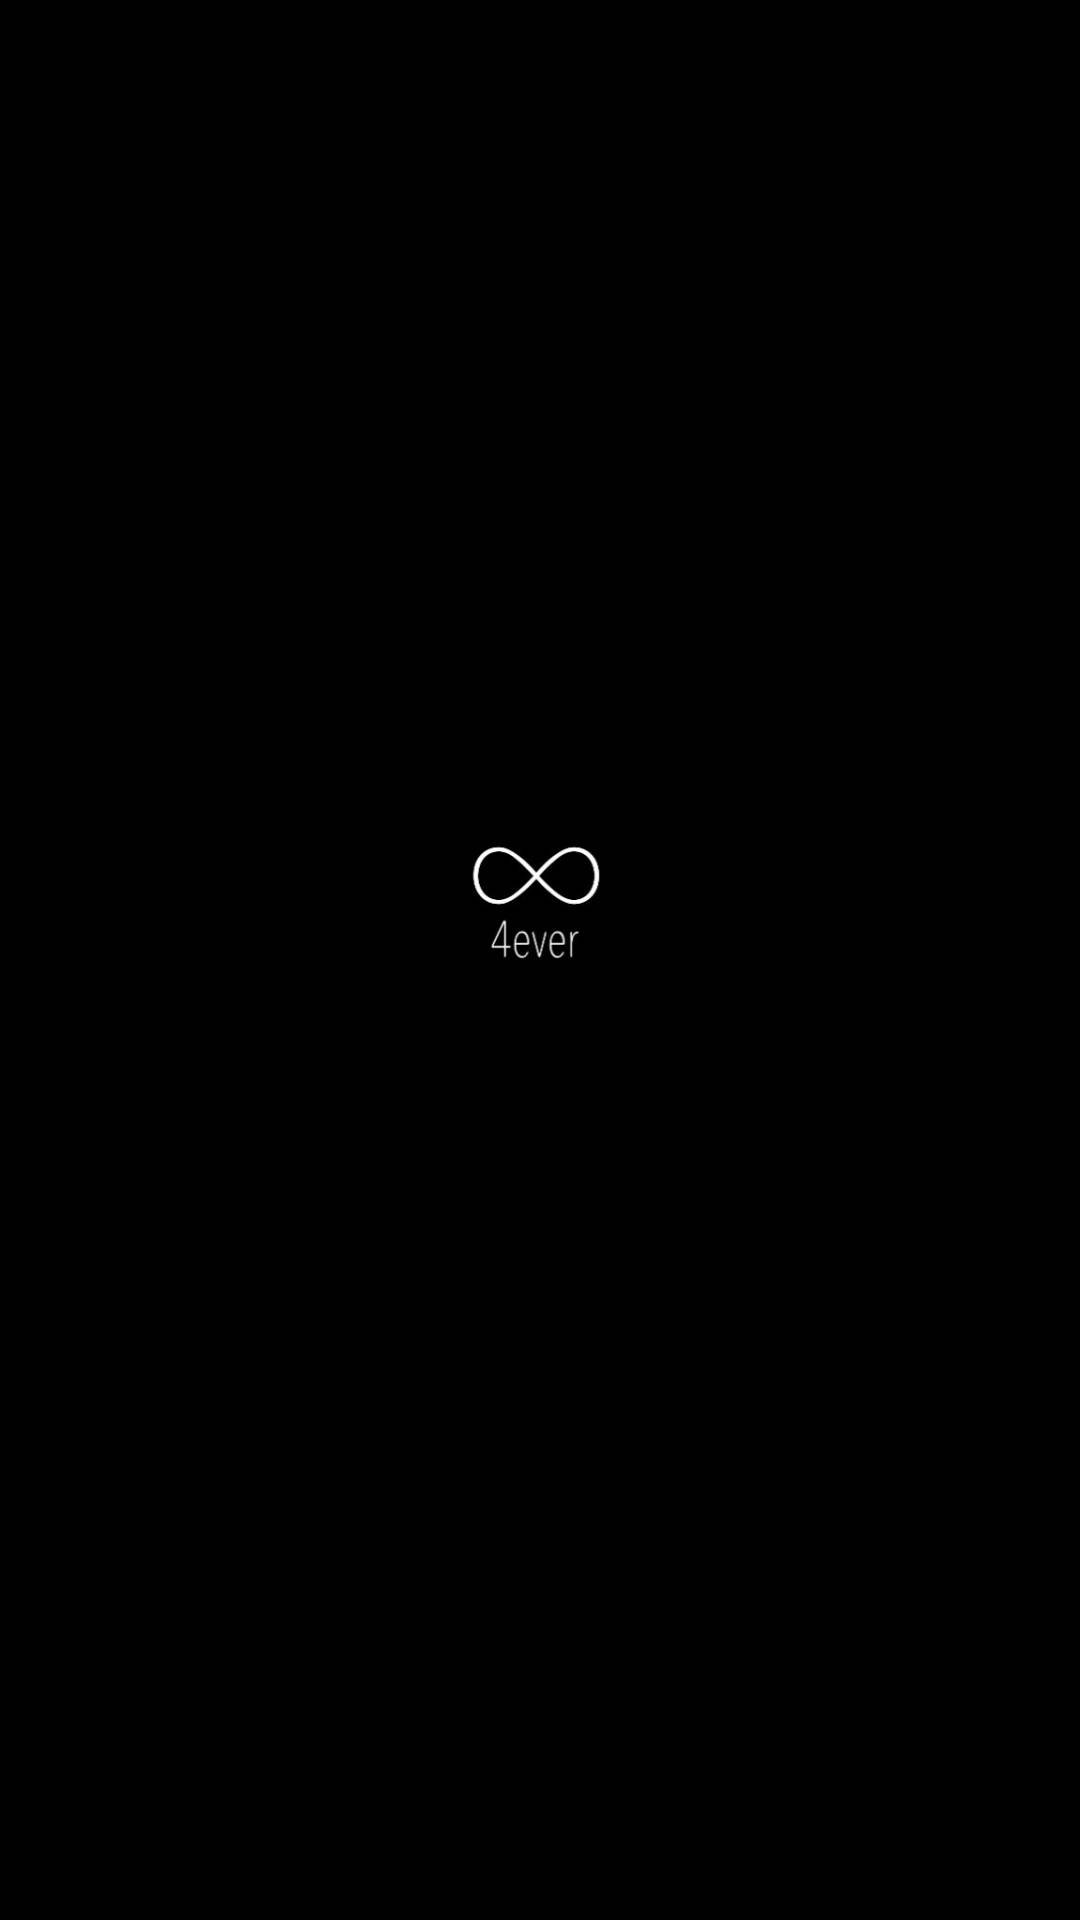 Dark Sad Infinity Sign Background